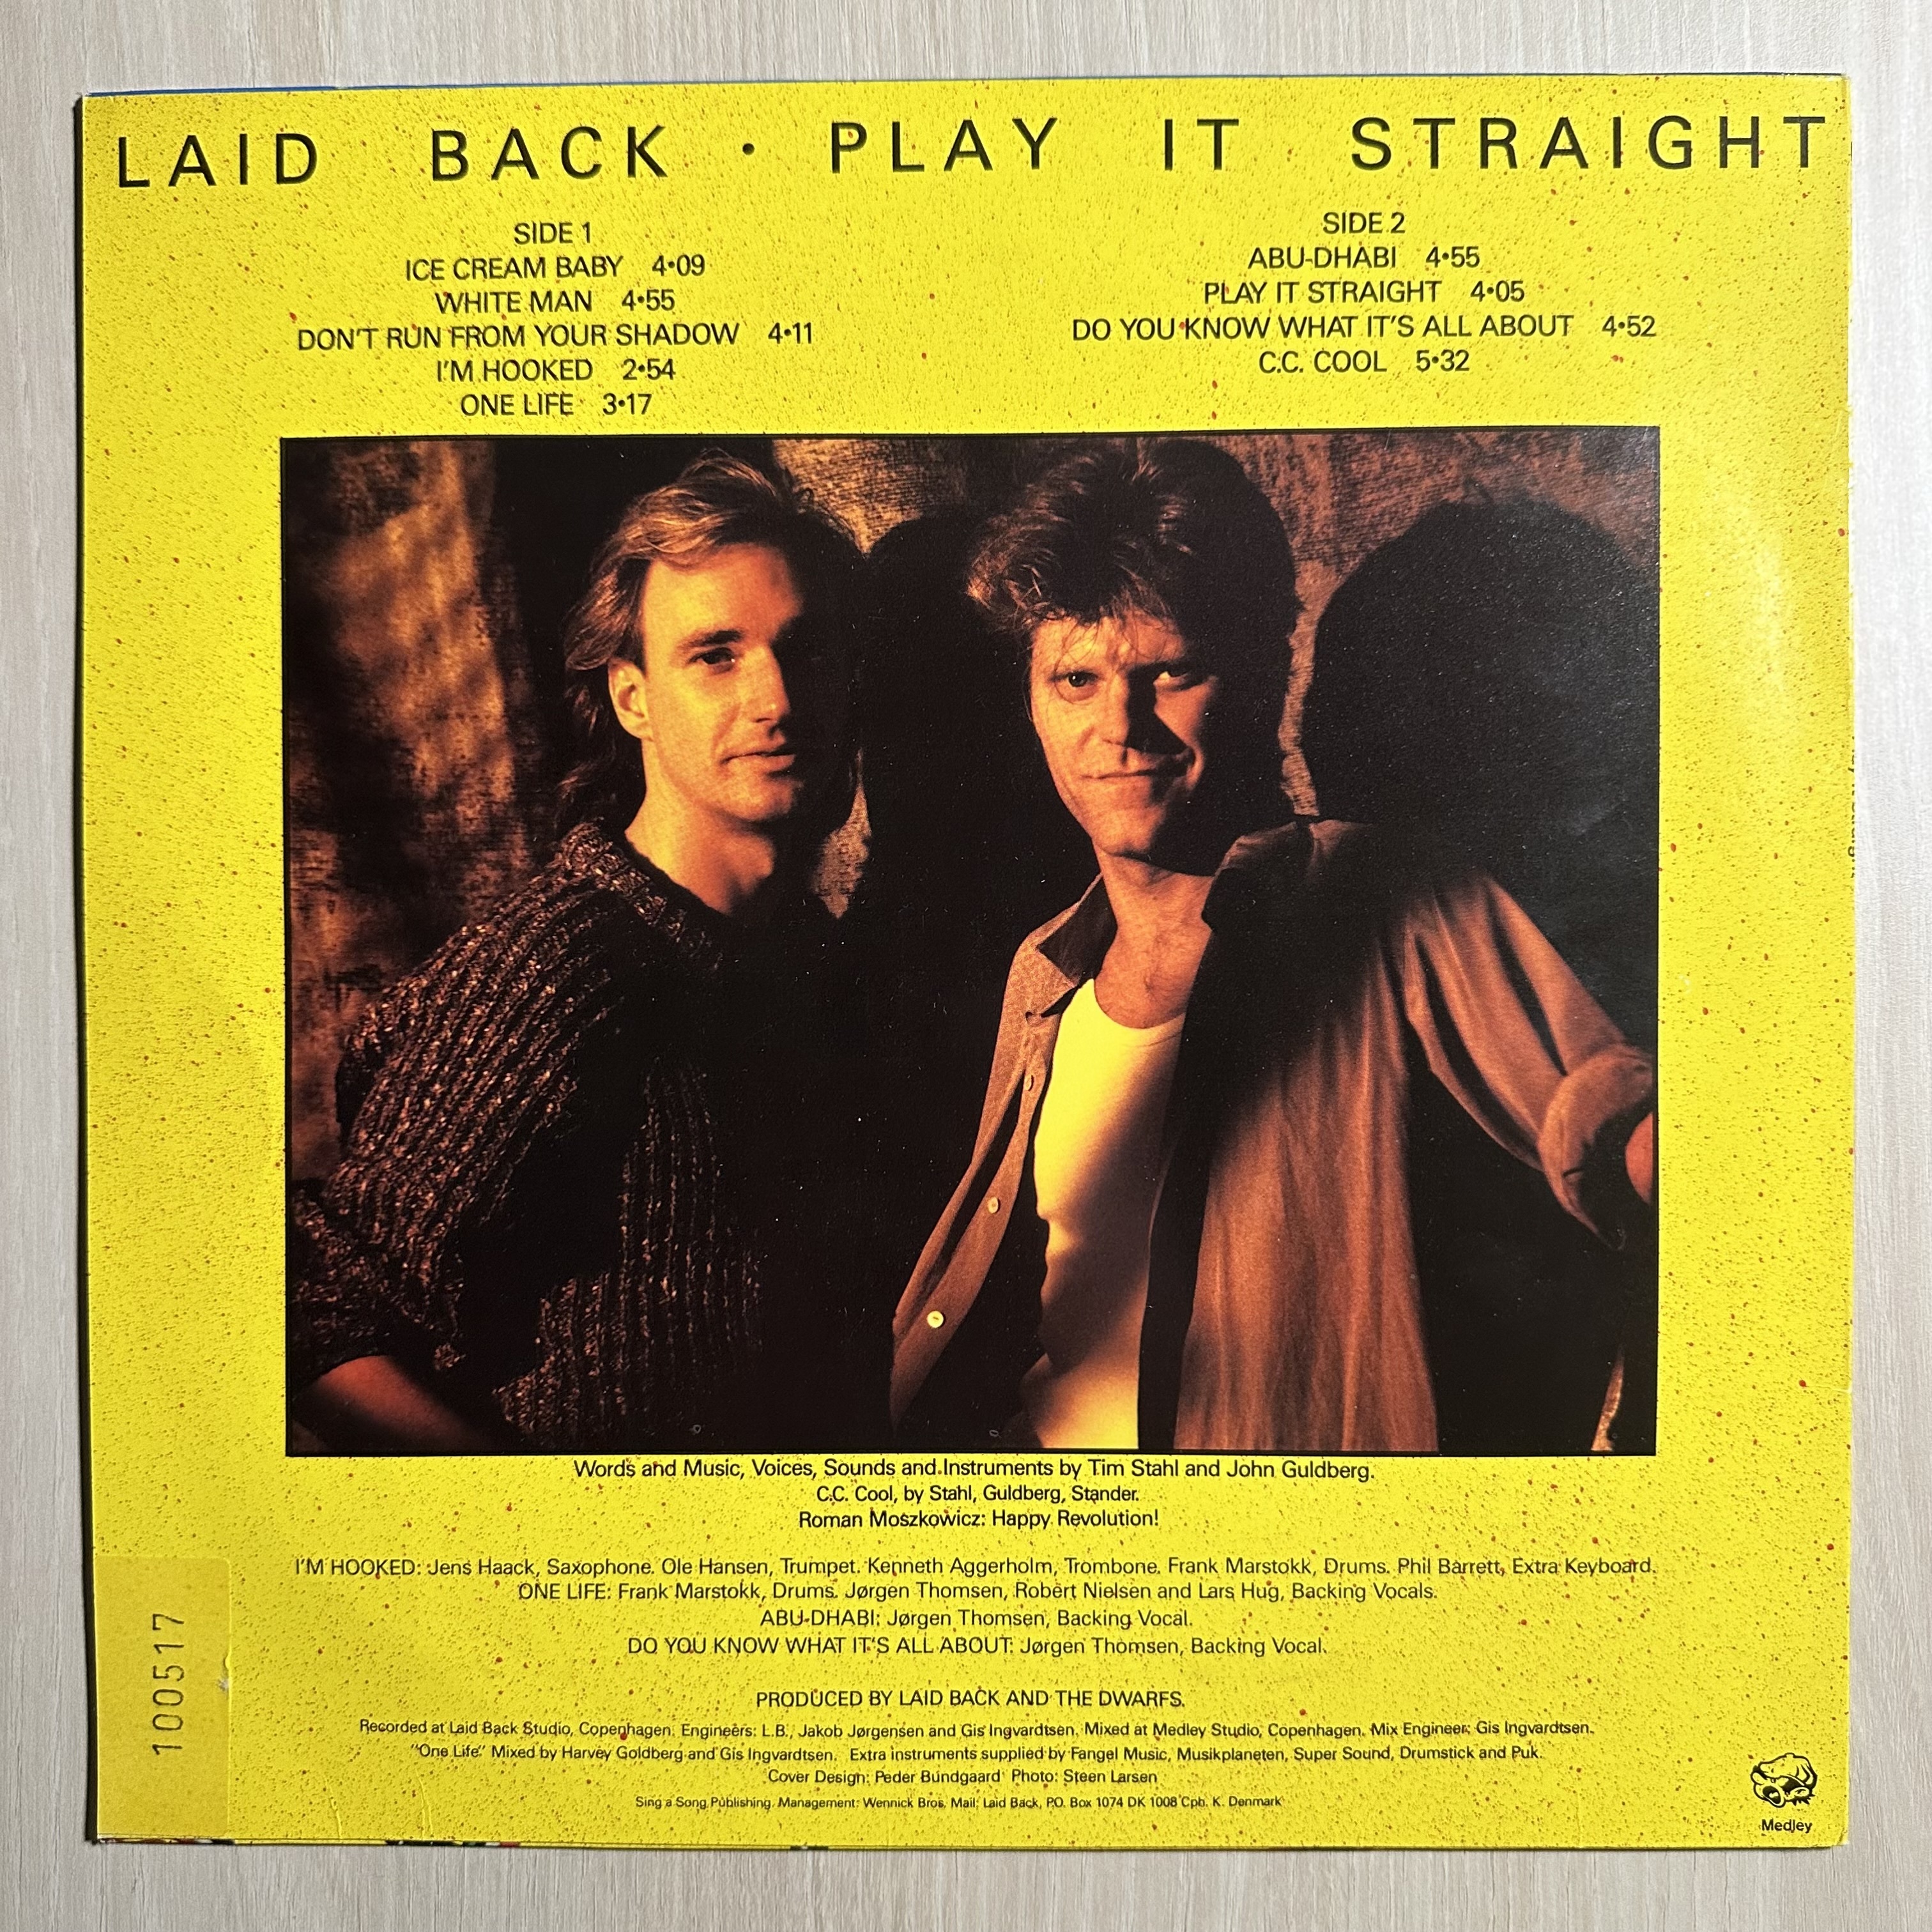 Laid back life. Laid back 1985 Play it straight LP. Laid back album 1985. Laid back обложки альбомов. Обложка кассеты laid back.